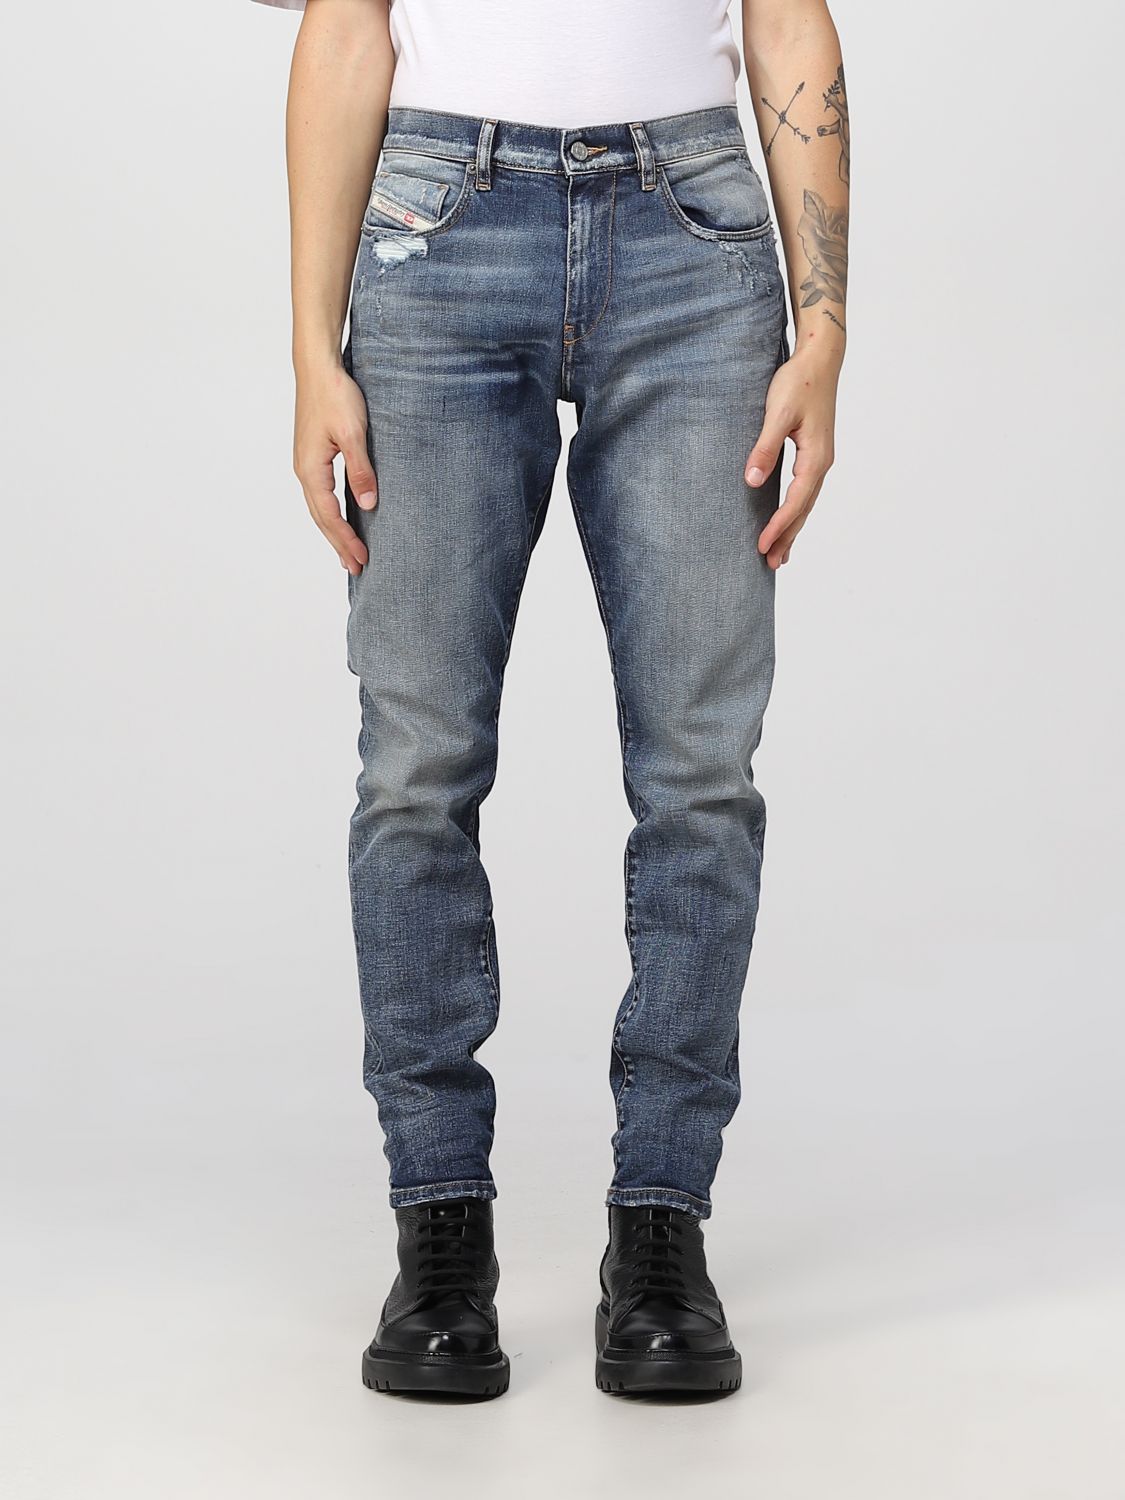 geluid draai Manuscript Diesel Outlet: jeans for man - Denim | Diesel jeans A0356209E15 online on  GIGLIO.COM